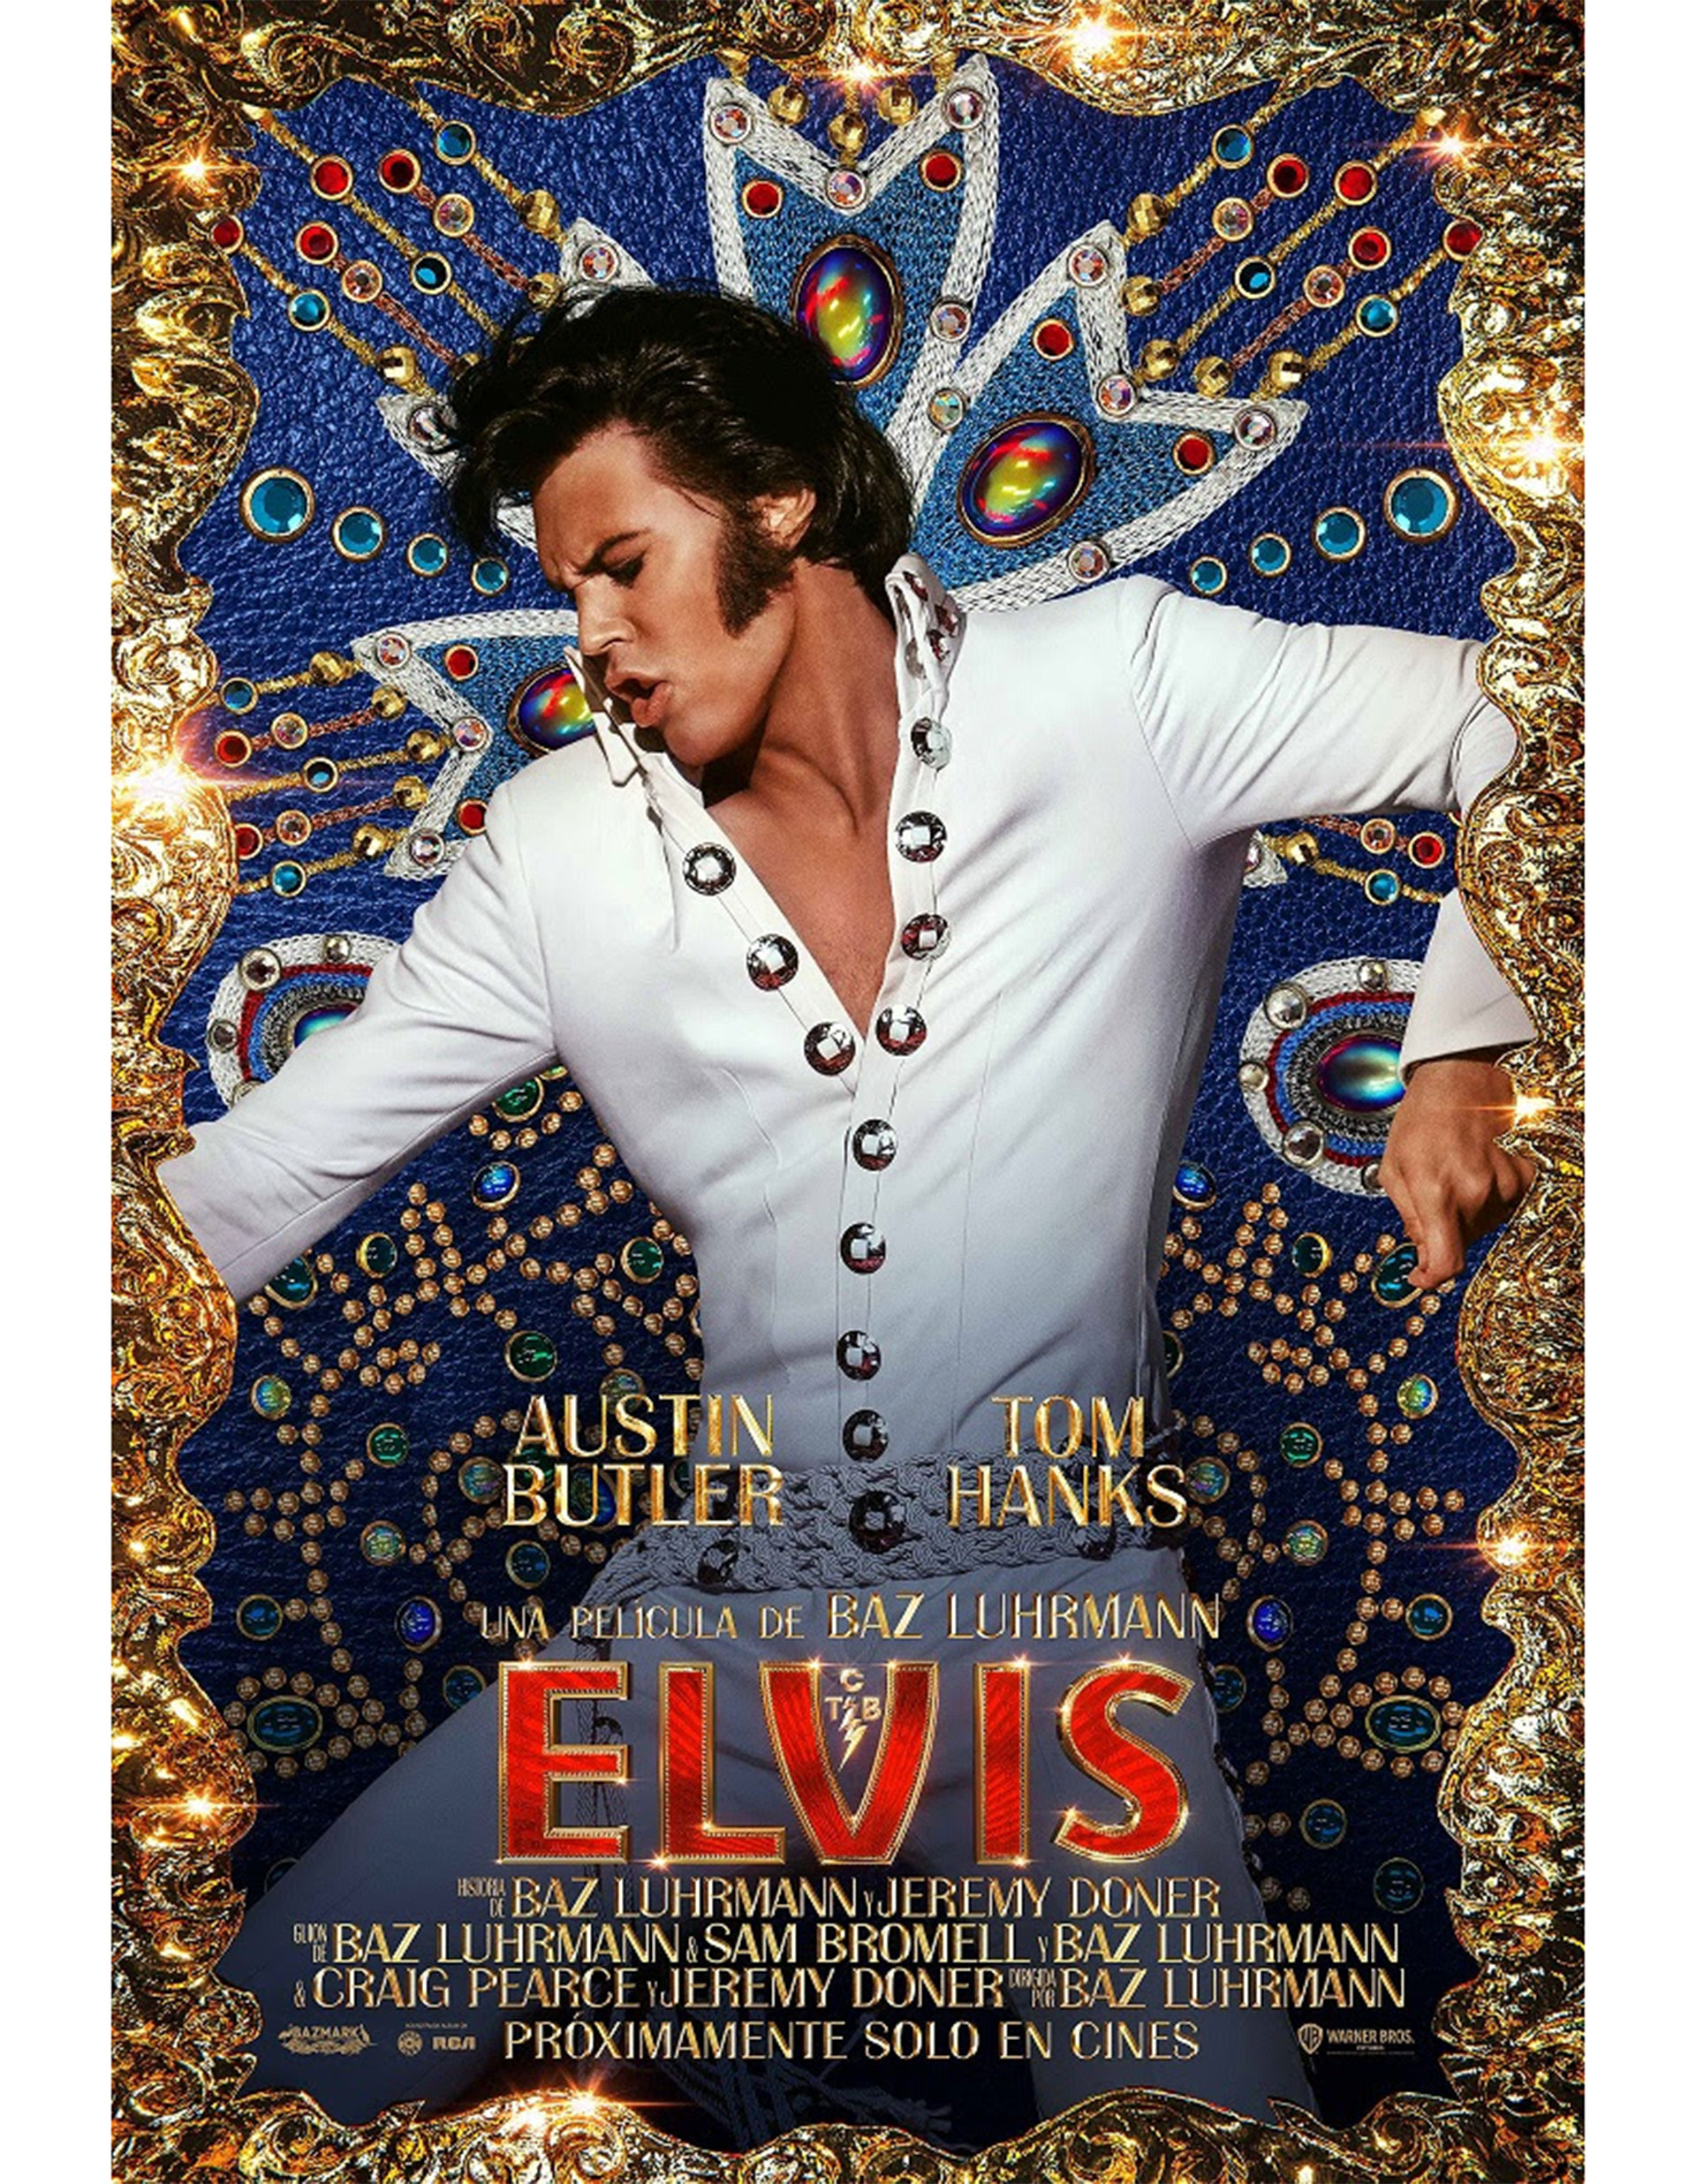 "Elvis": hit theaters last Thursday.  (WarnerPictures)